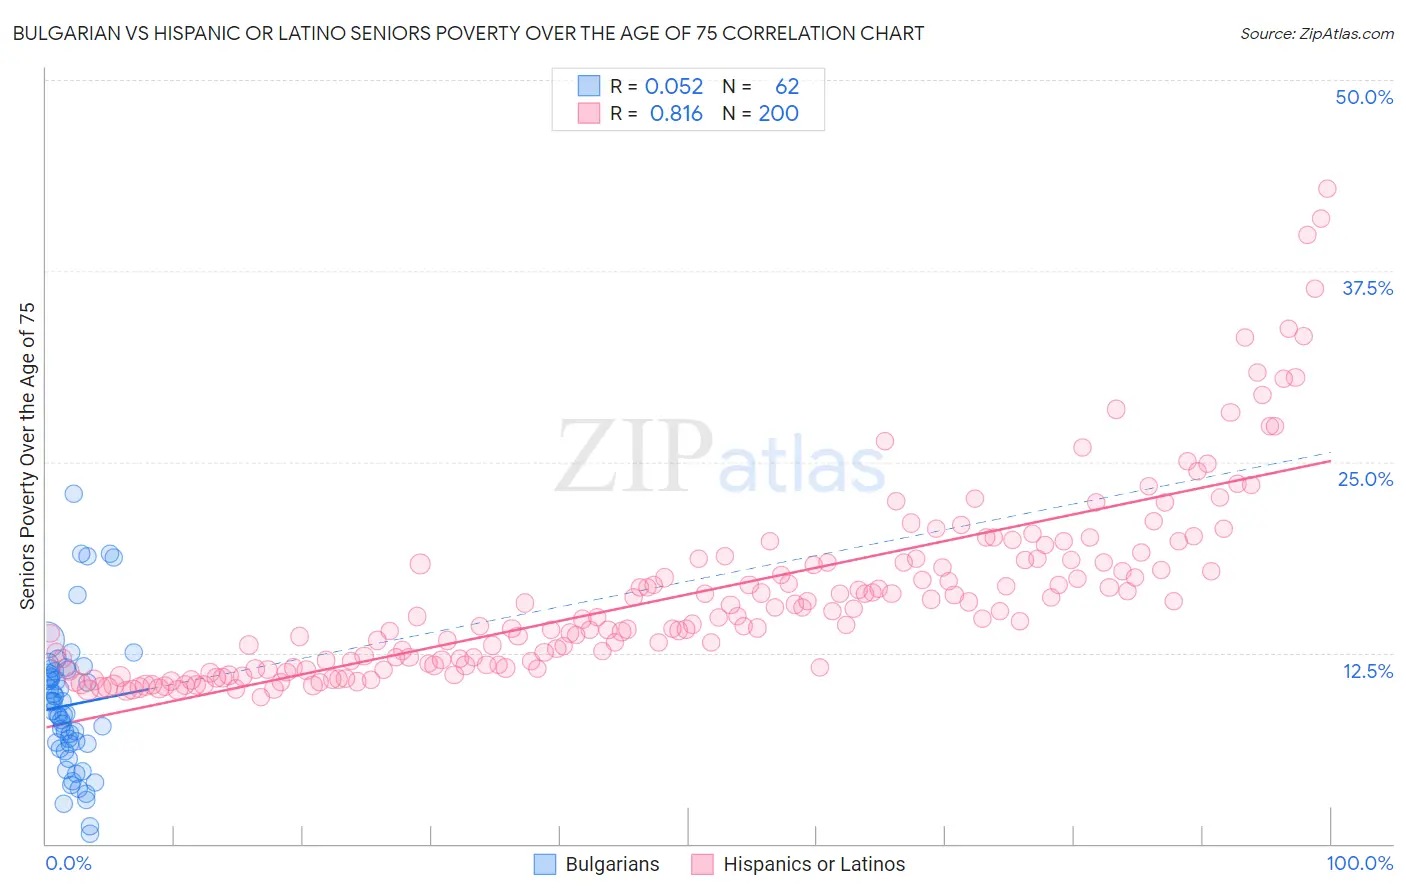 Bulgarian vs Hispanic or Latino Seniors Poverty Over the Age of 75